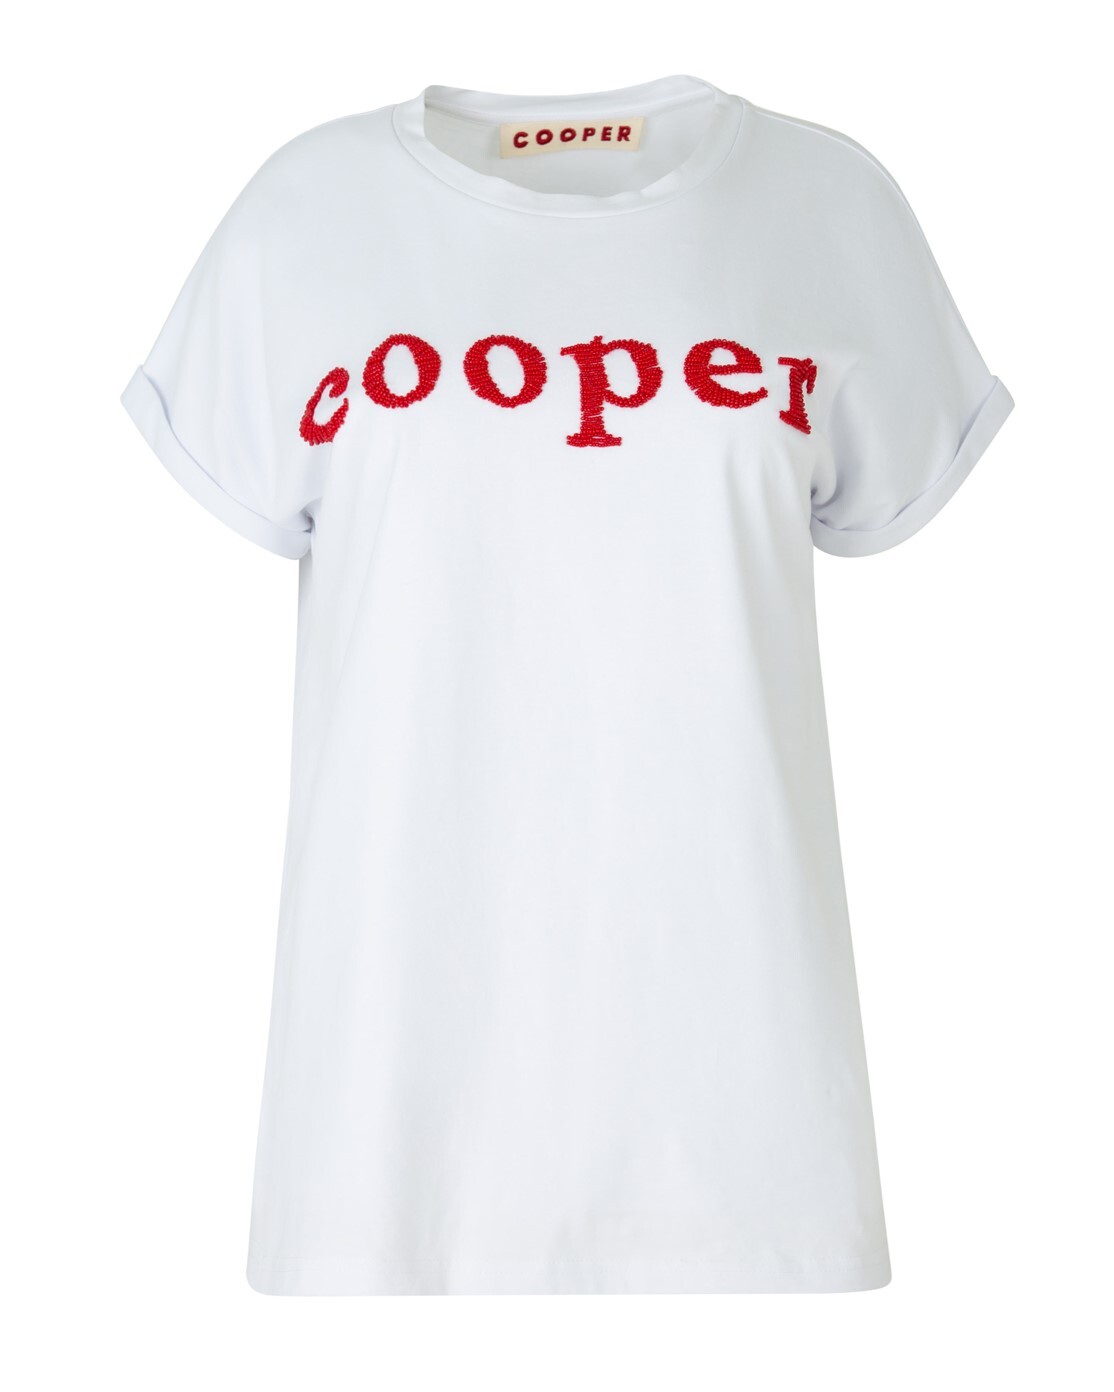 I BEAD COOPER TEE (WHITE/RED)- COOPER AUTUMN WINTER 21